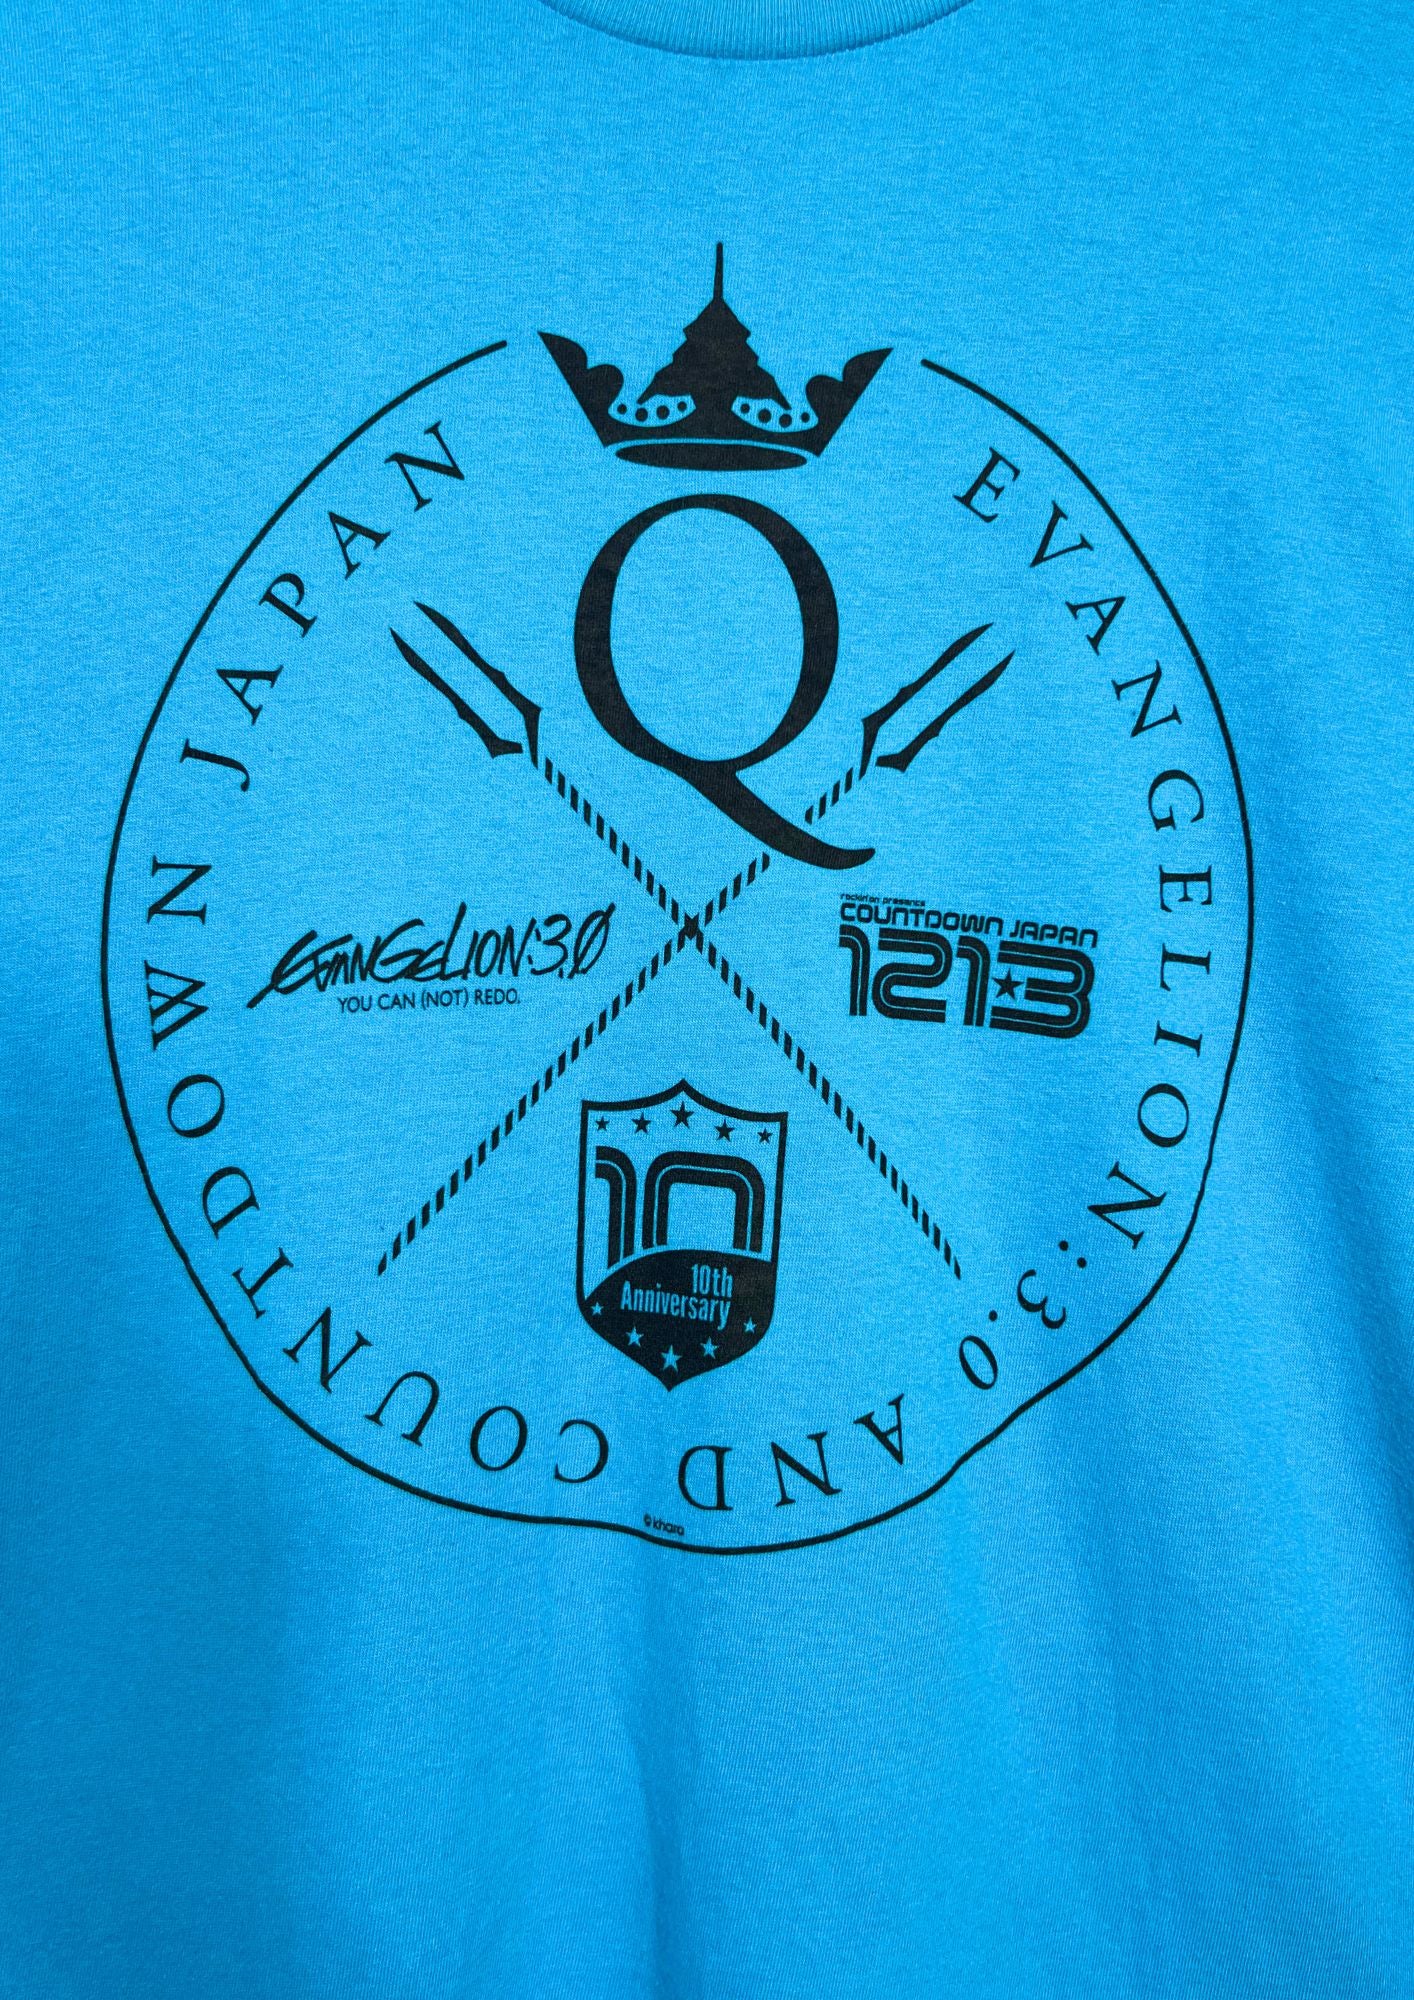 2012 Neon Genesis Evangelion x Rockin'on 2013 Countdown Japan Festival T-shirt